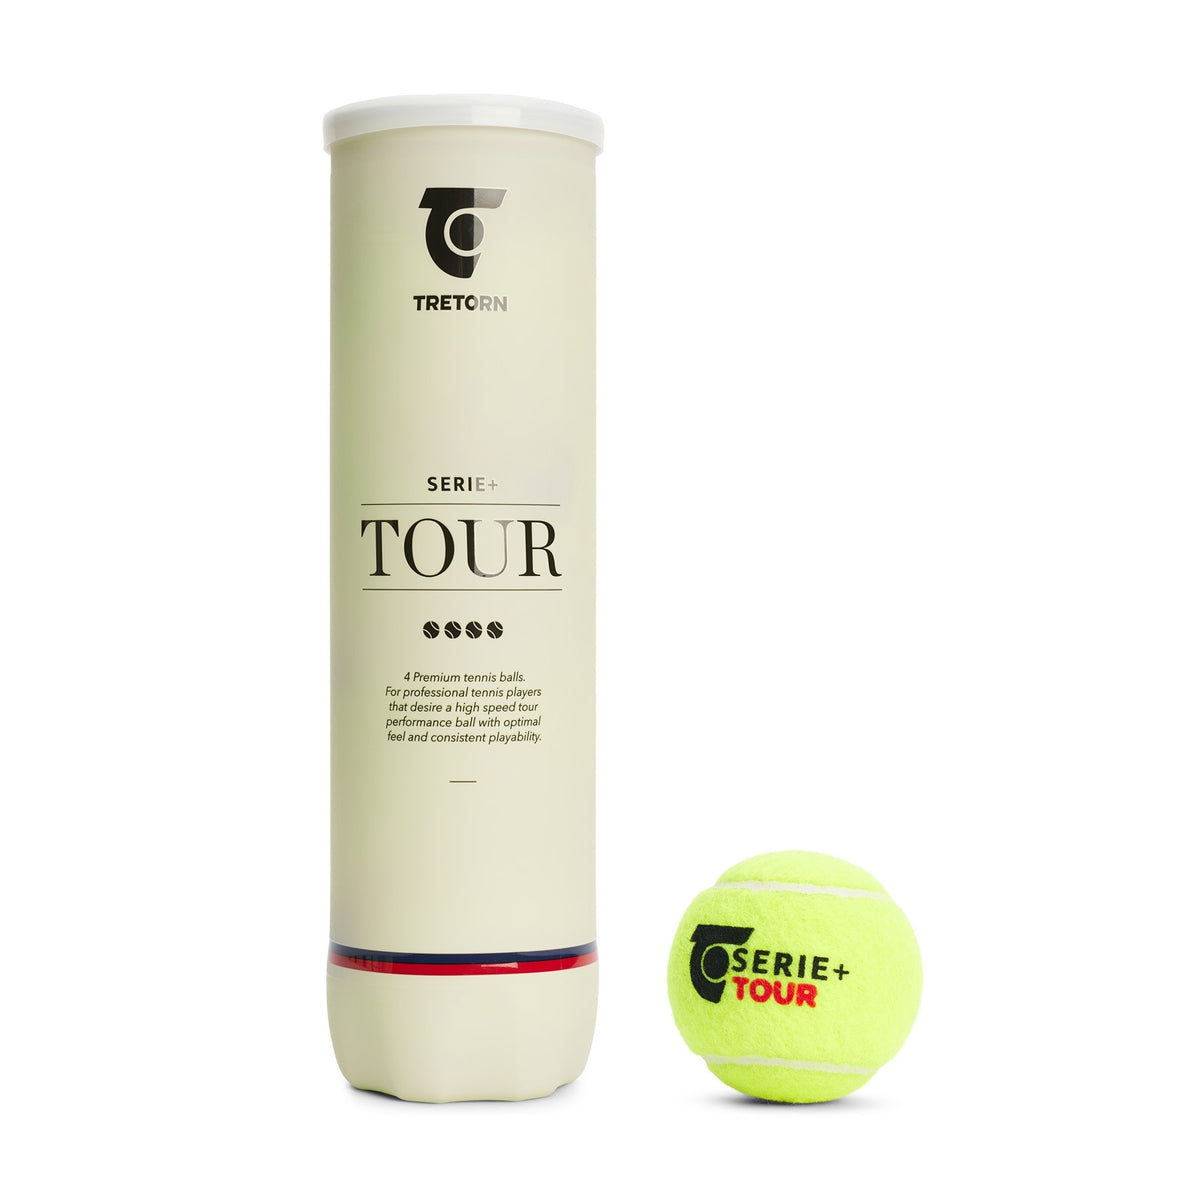 Tretorn Serie+ Tour - Swiss Tennis